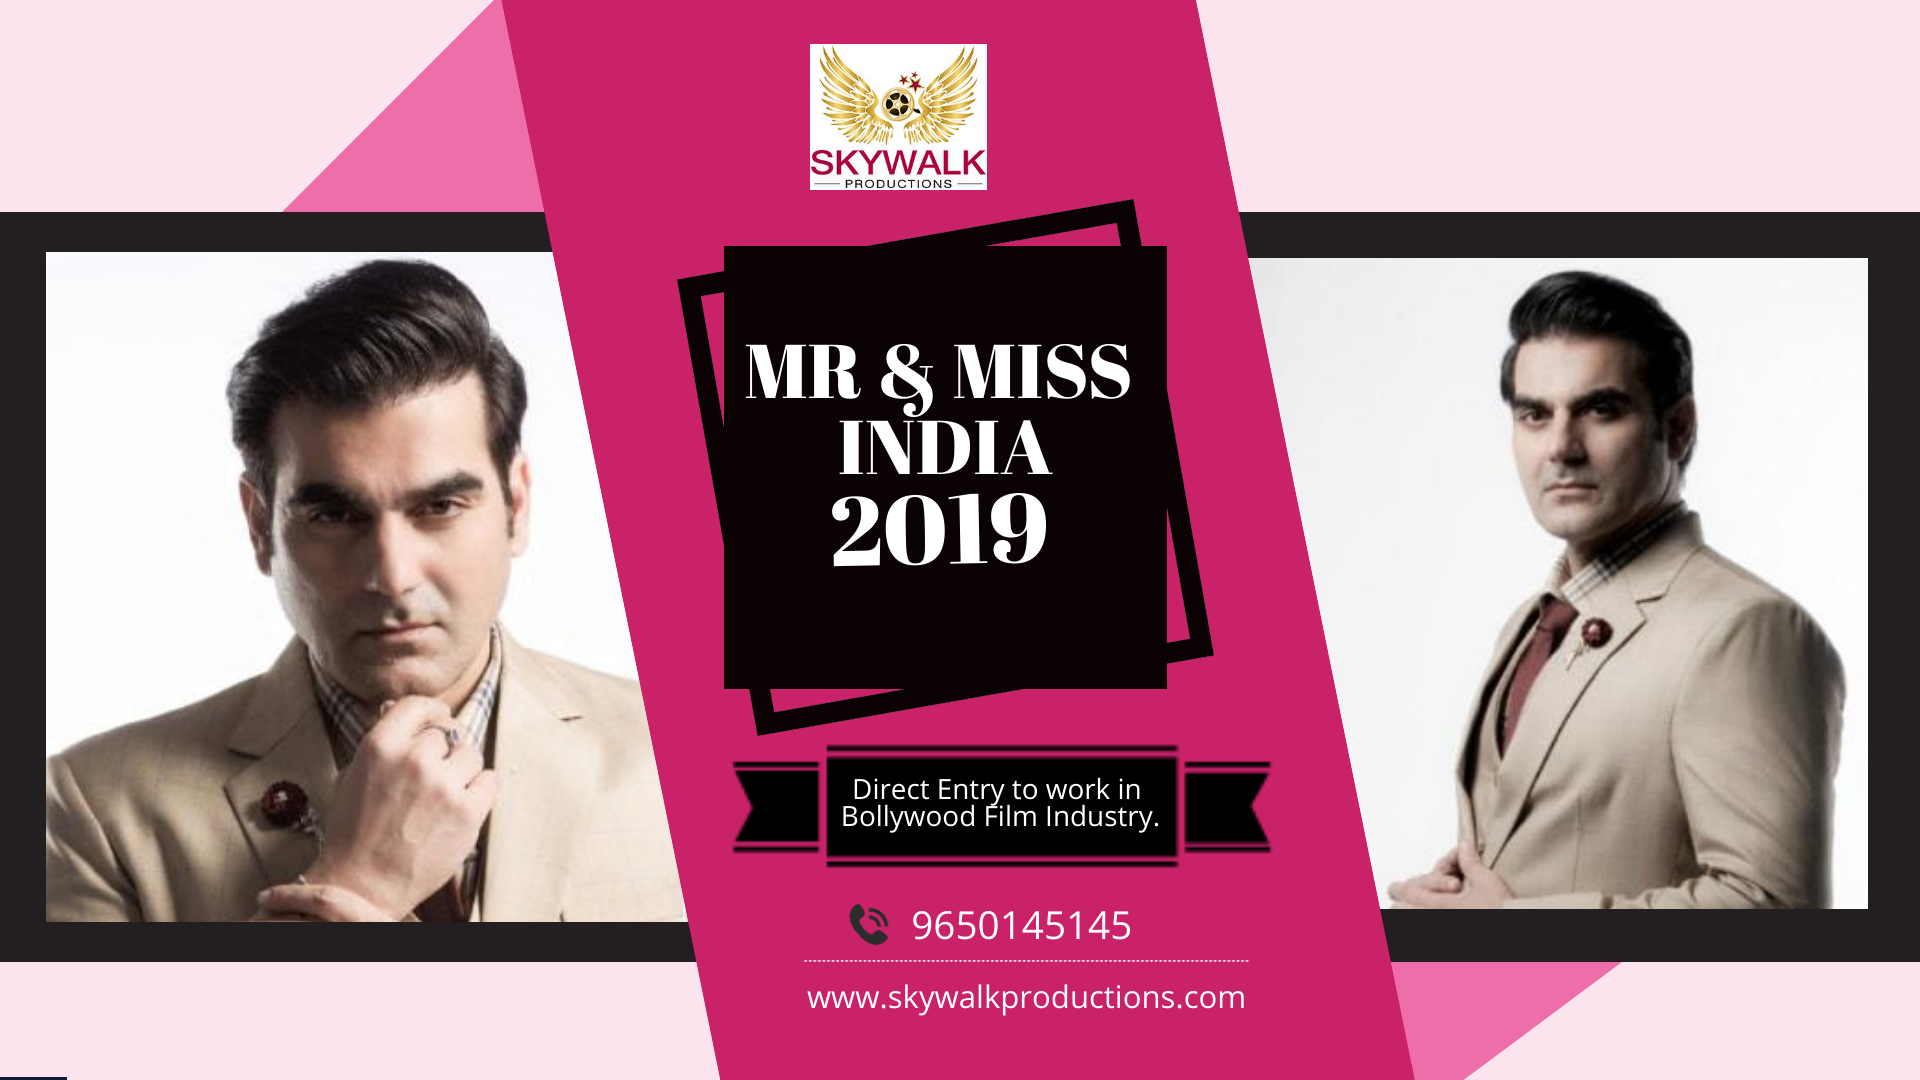 Mr and Miss India 2019, Central Delhi, Delhi, India